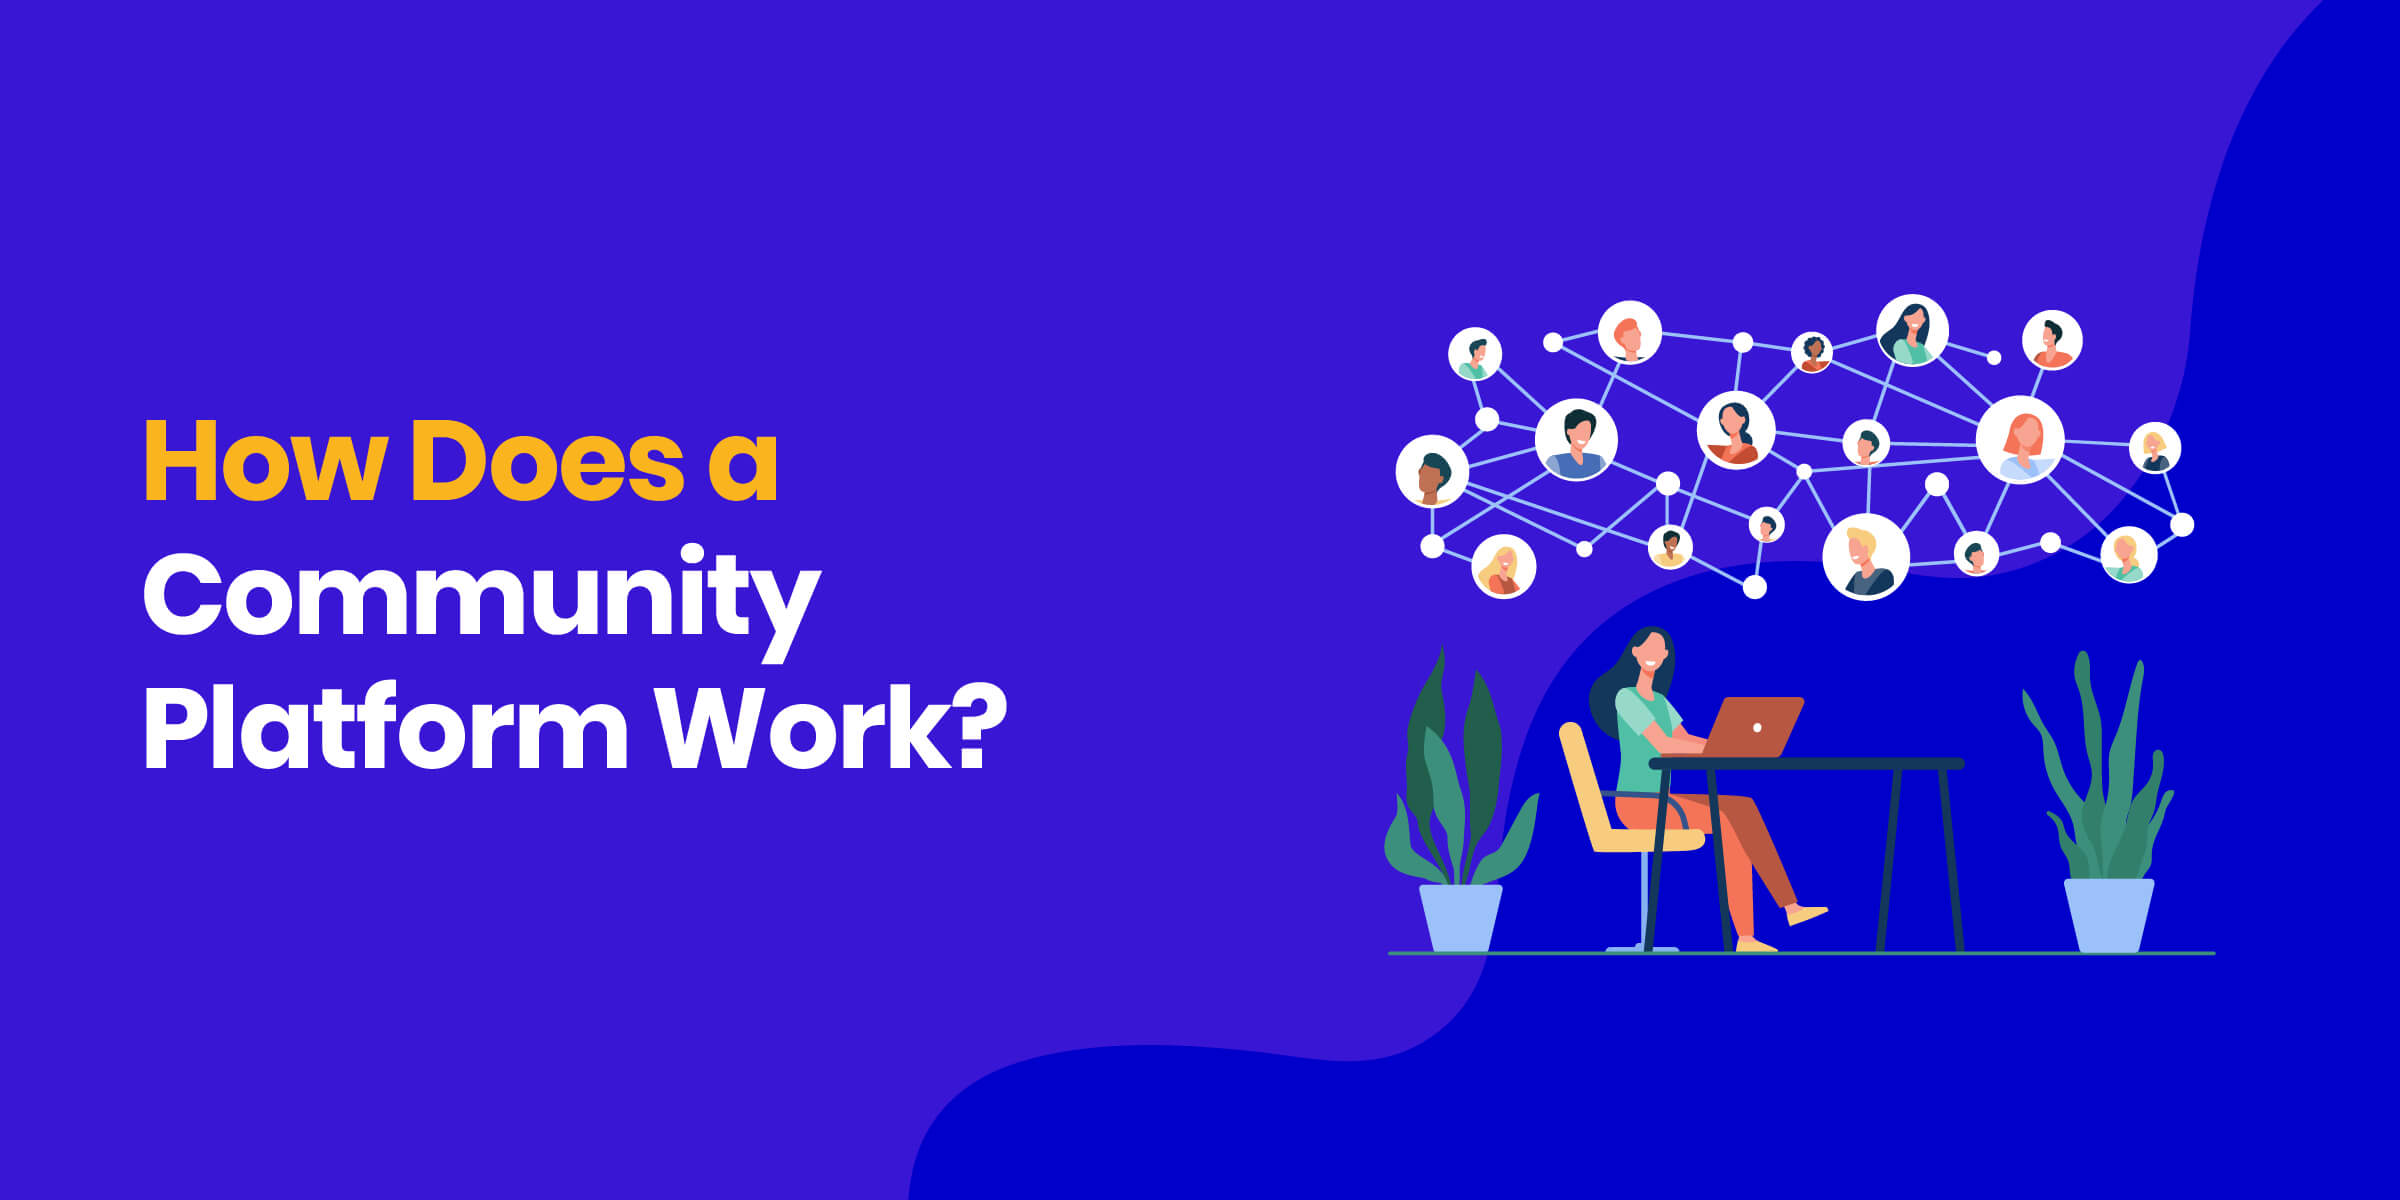 How Does a Community Platform Work